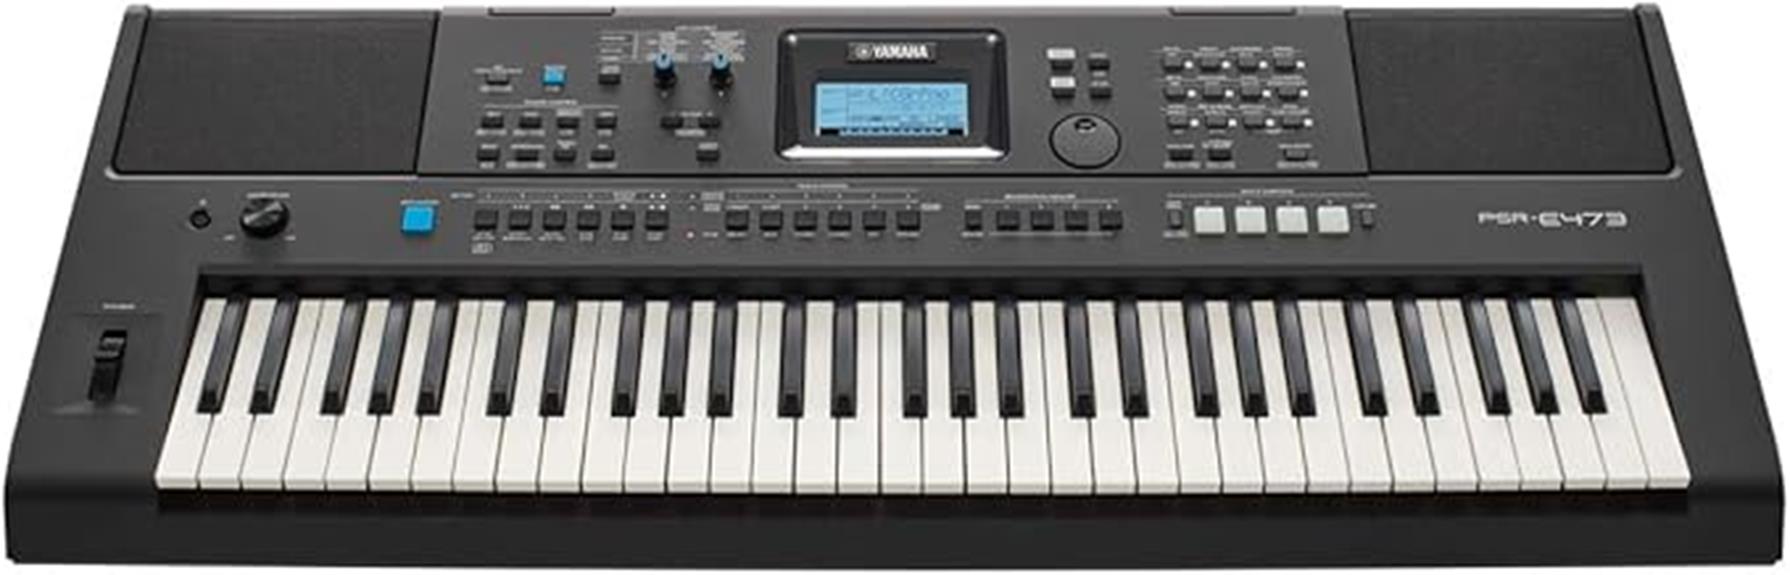 portable yamaha keyboard black